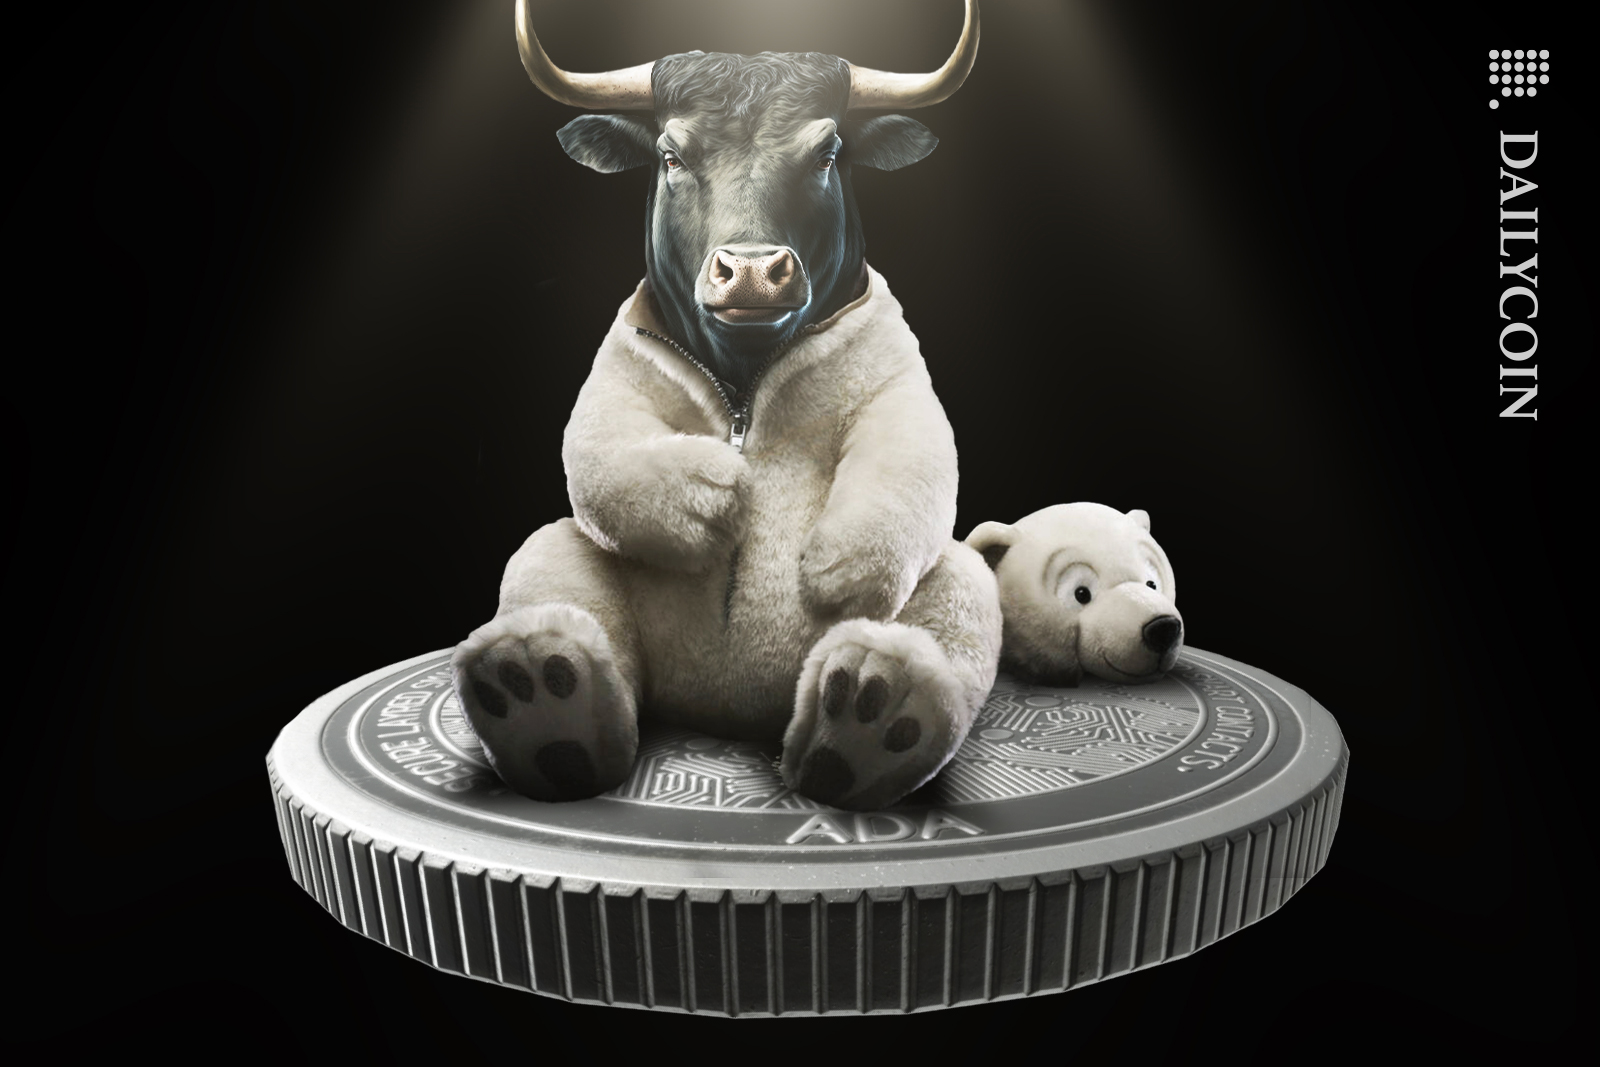 A bull unzipping his bear costume on a Cardano coin.